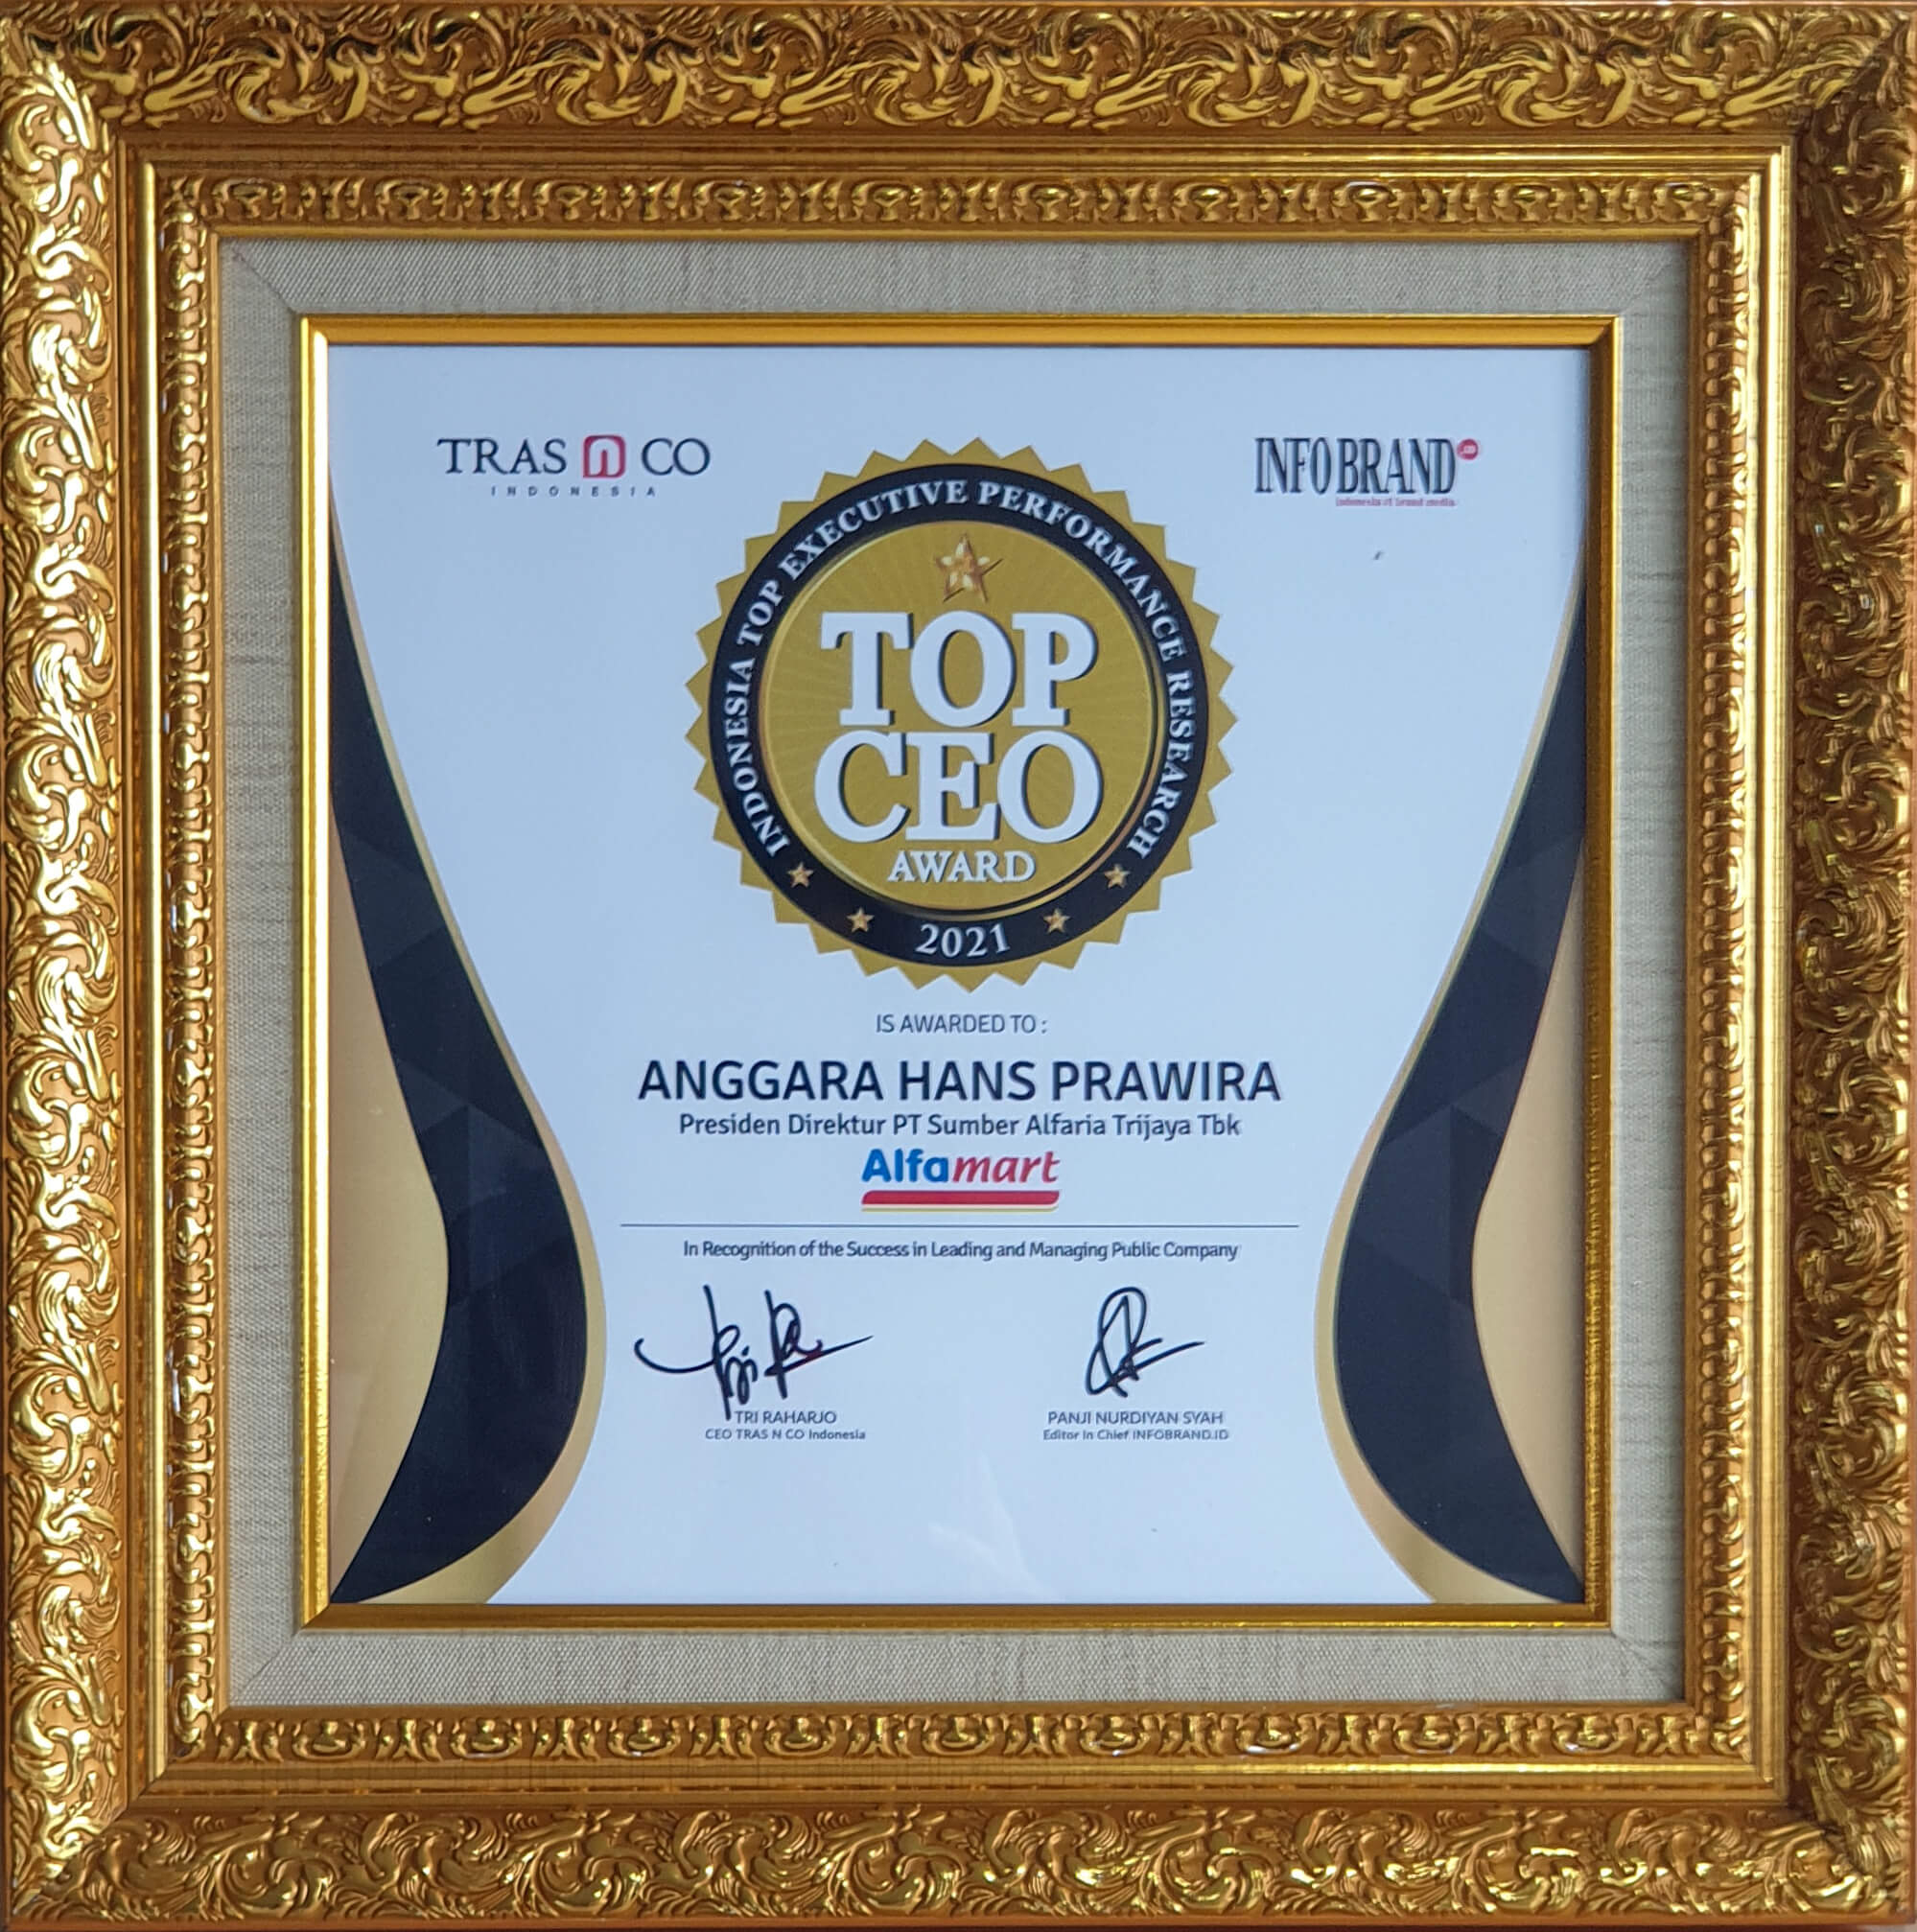 Image reward Top CEO Award 2021 dari InfoBrand